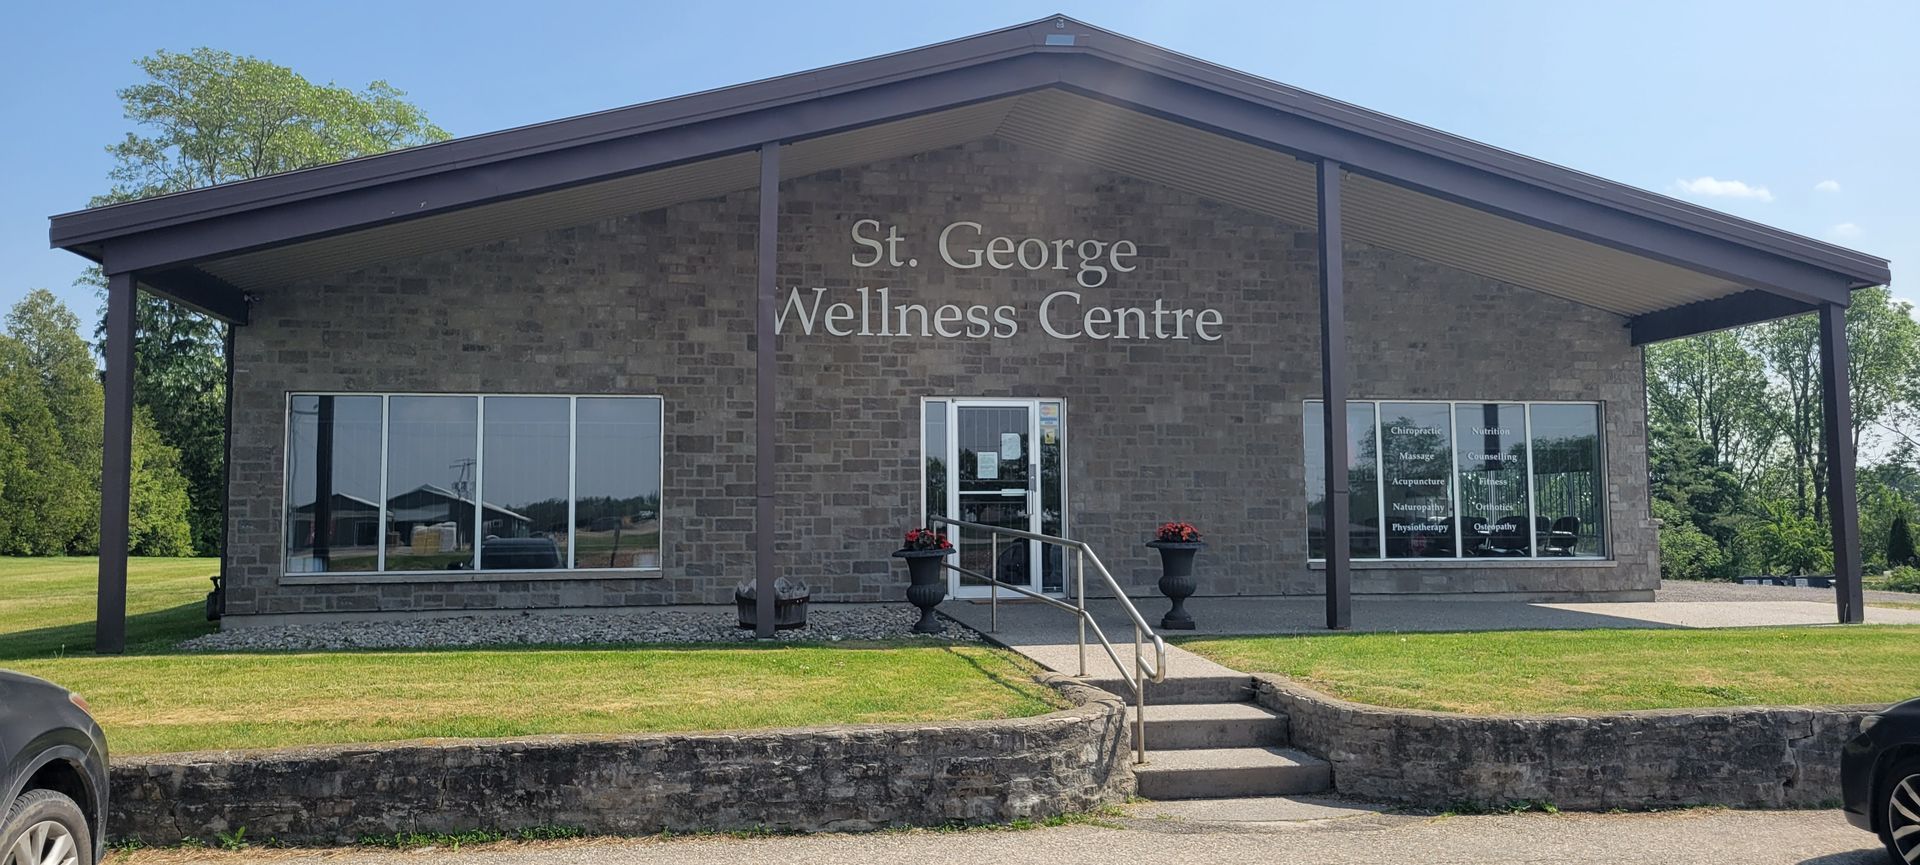 St. Georage Wellness Centre